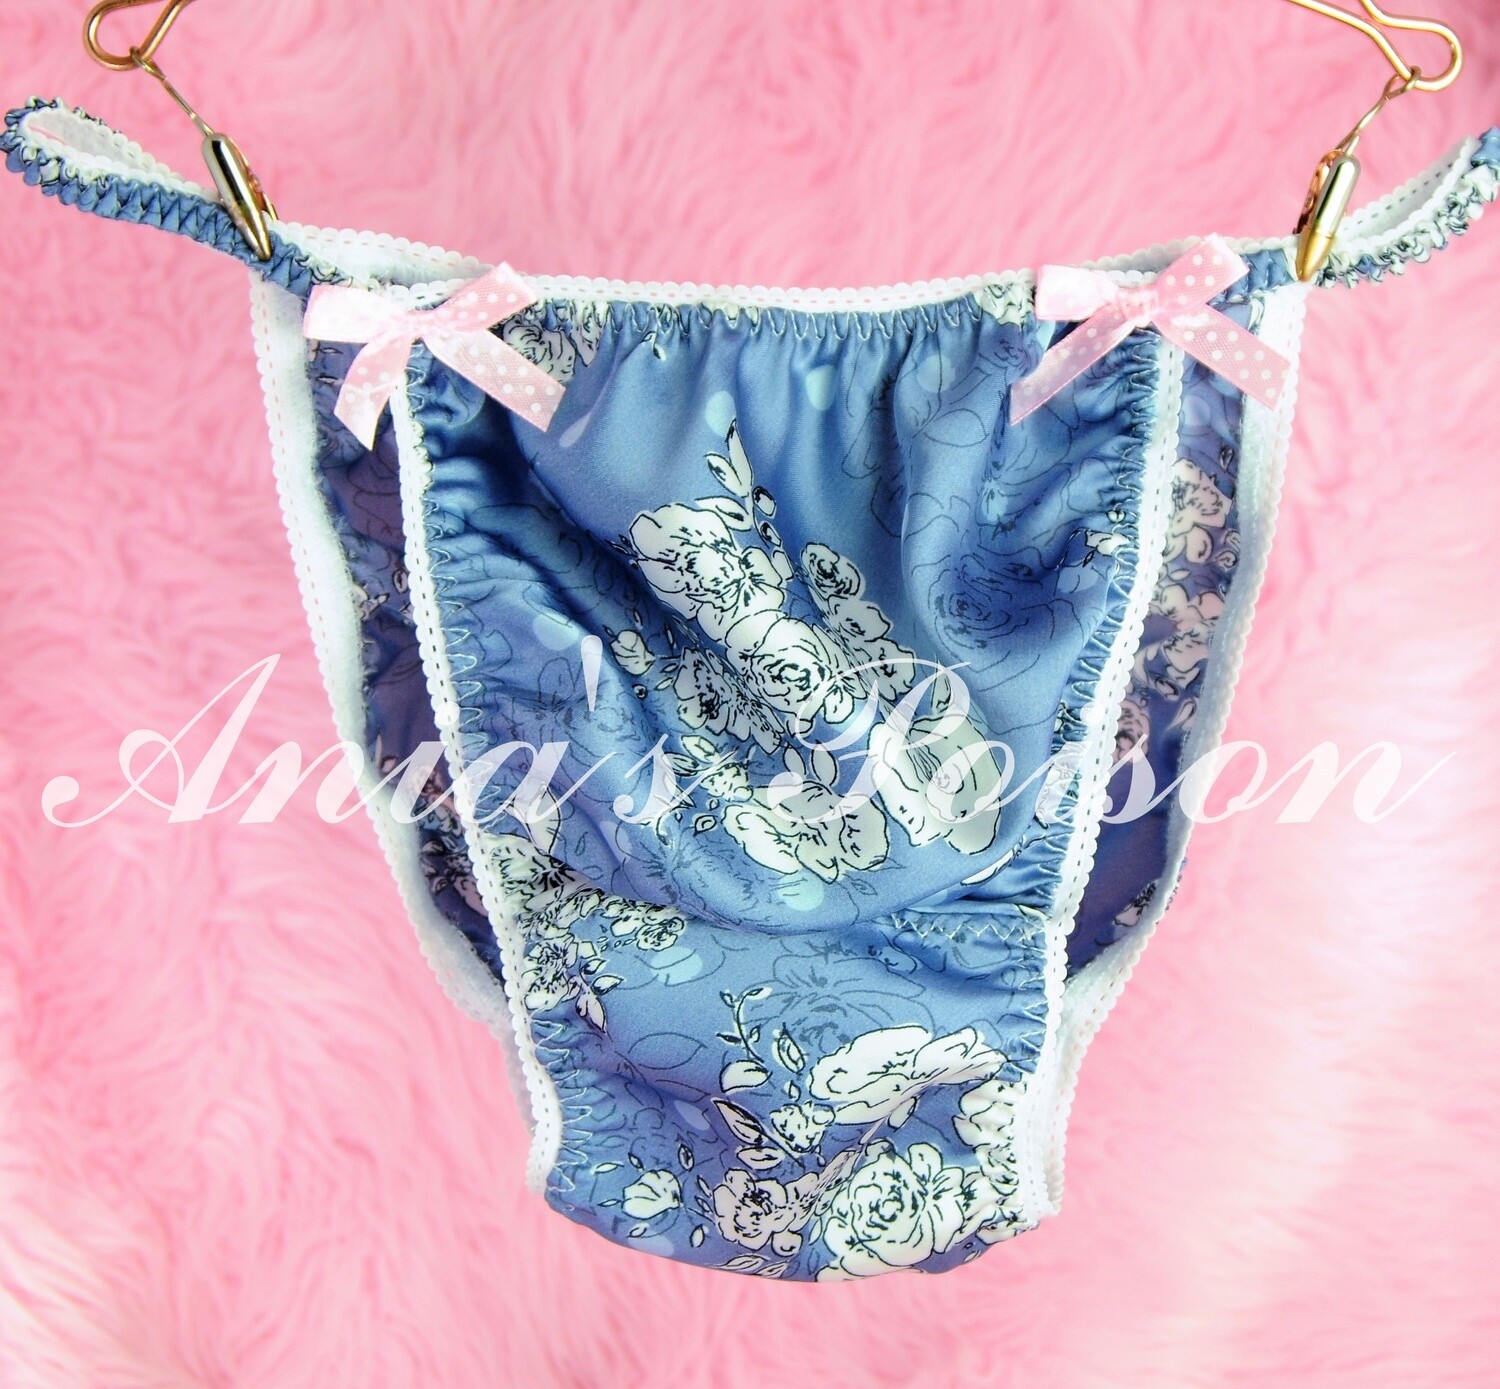 Ania's Poison summer pink or blue polka dot floral print 100% polyester SATIN string bikini sissy mens underwear panties